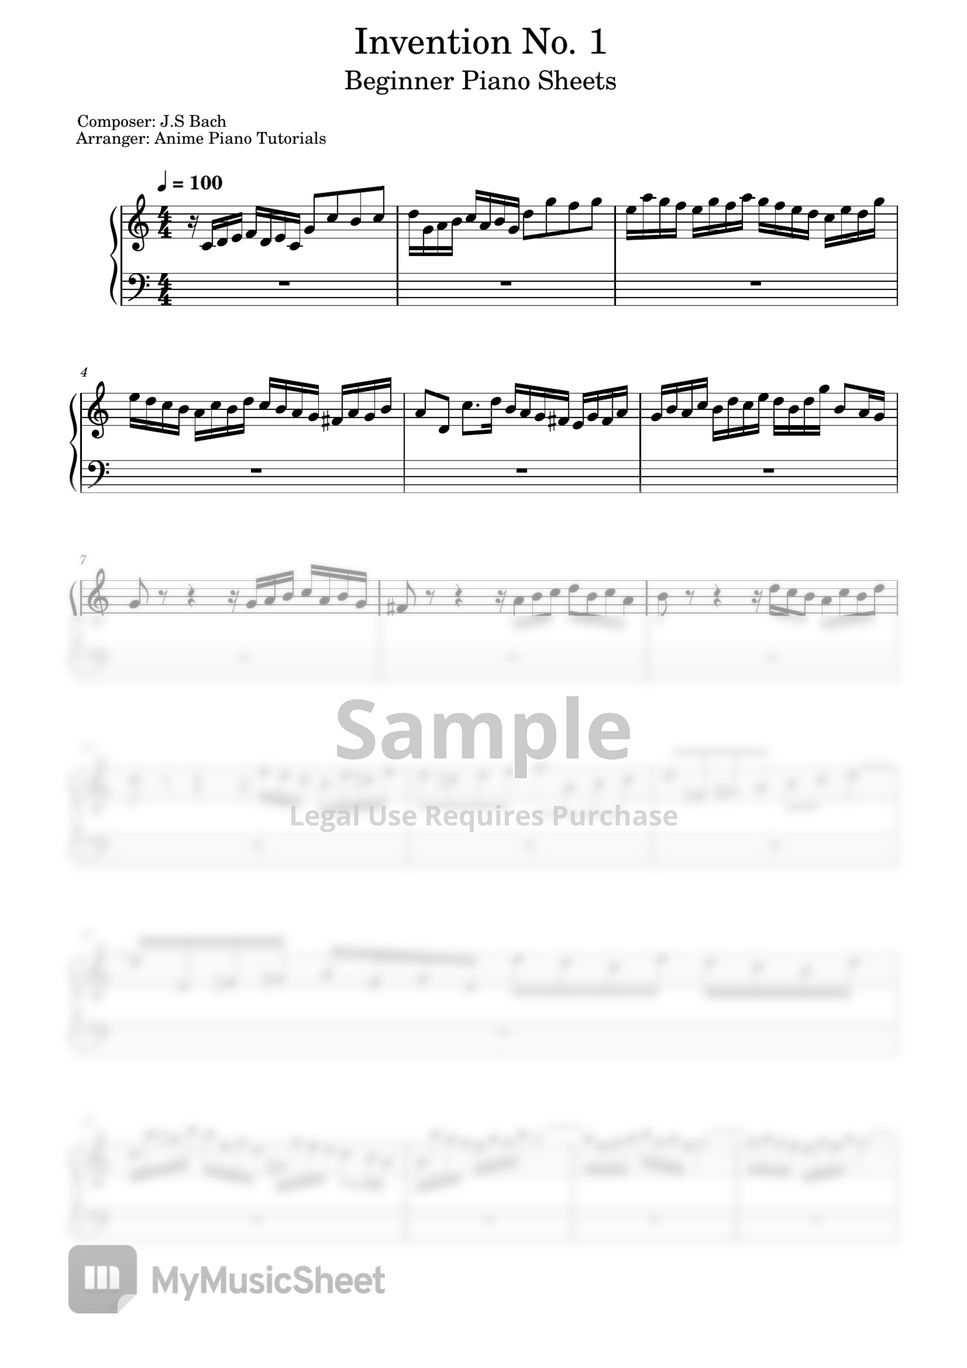 Johann Sebastian Bach - Invention No. 1 (Beginner) by Anime Piano Tutorials